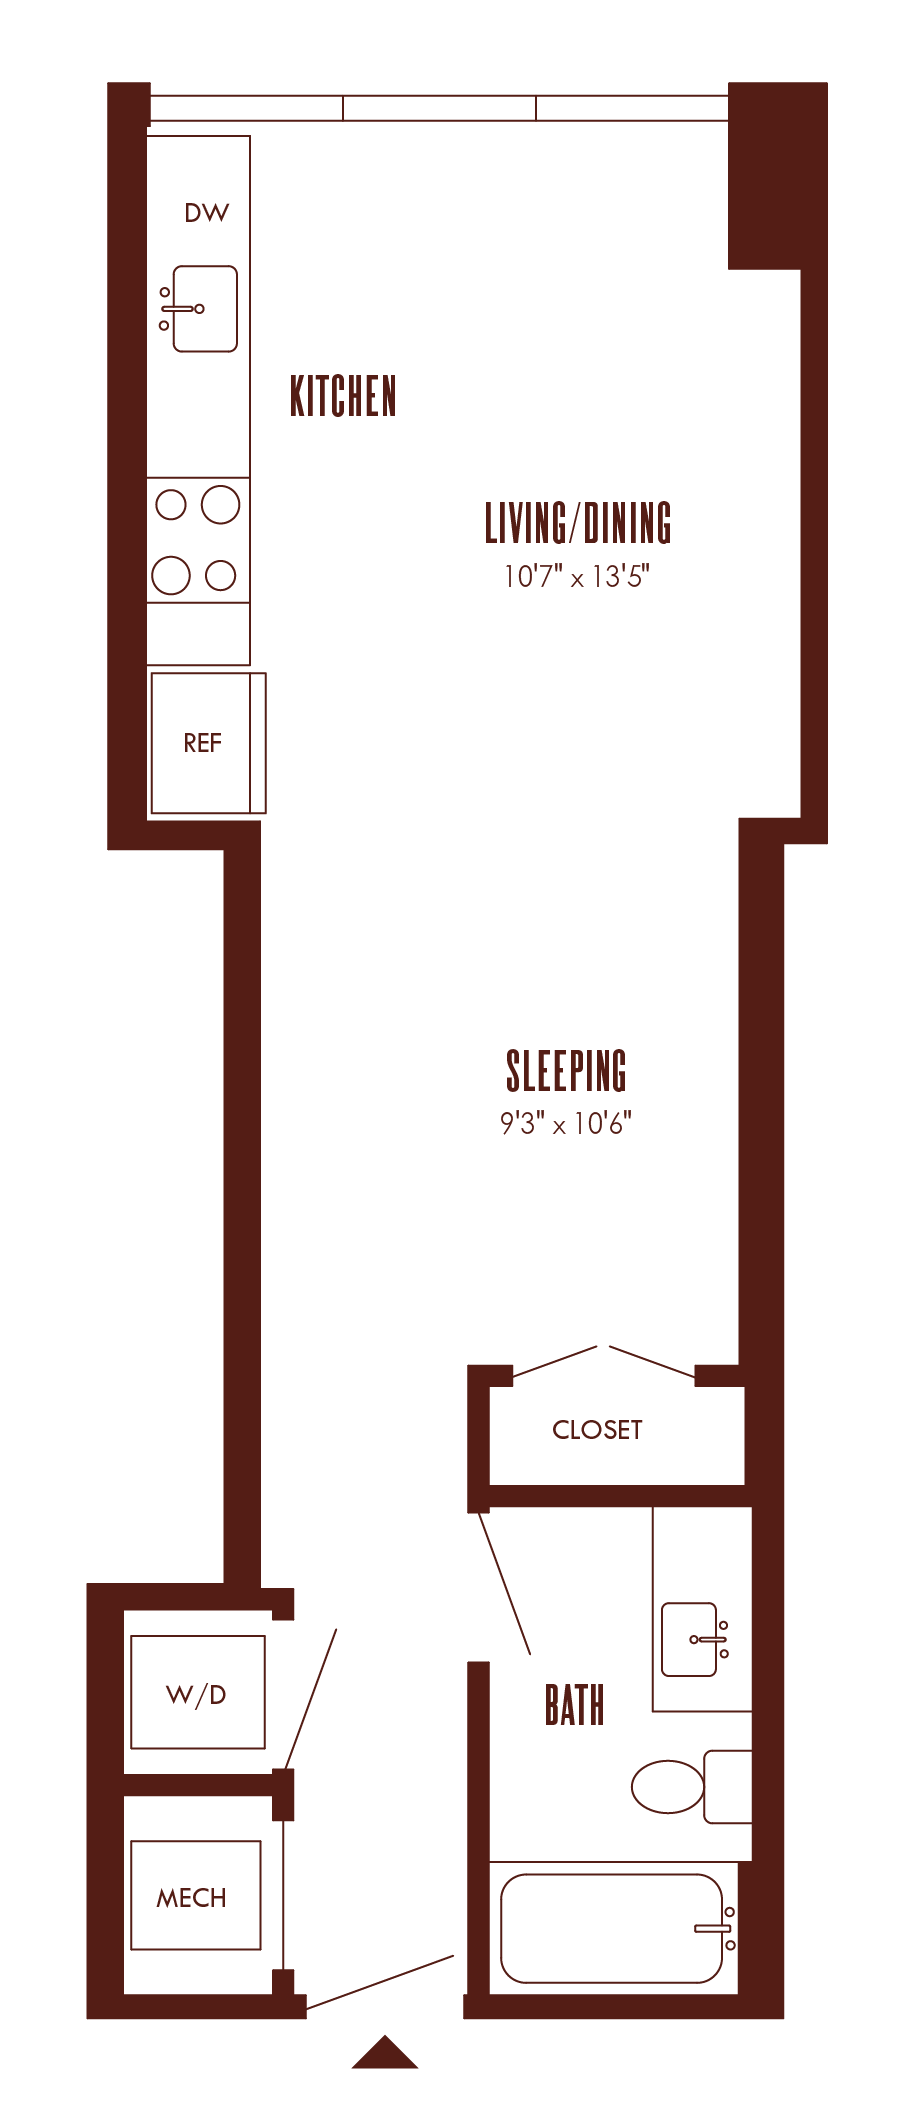 Floor Plan Image of Apartment Apt 27J